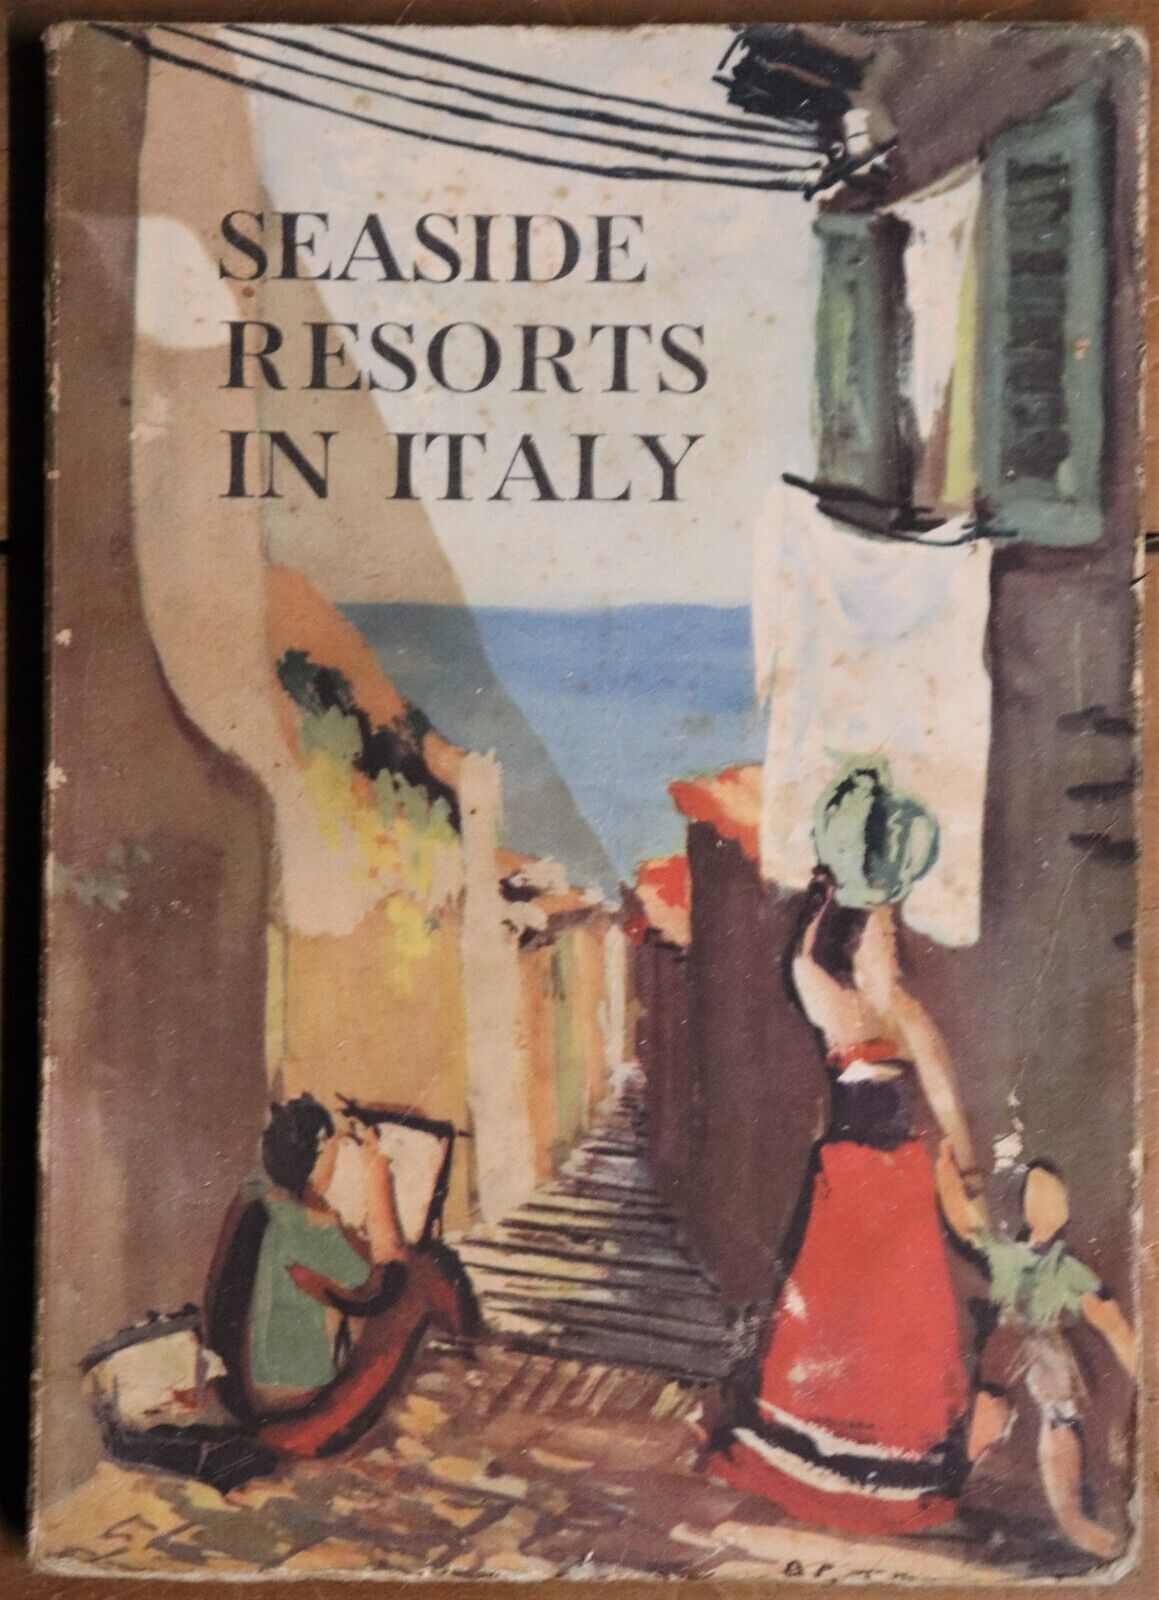 Sea-side Resorts In Italy - 1951 - Italian Tourist Guide Book